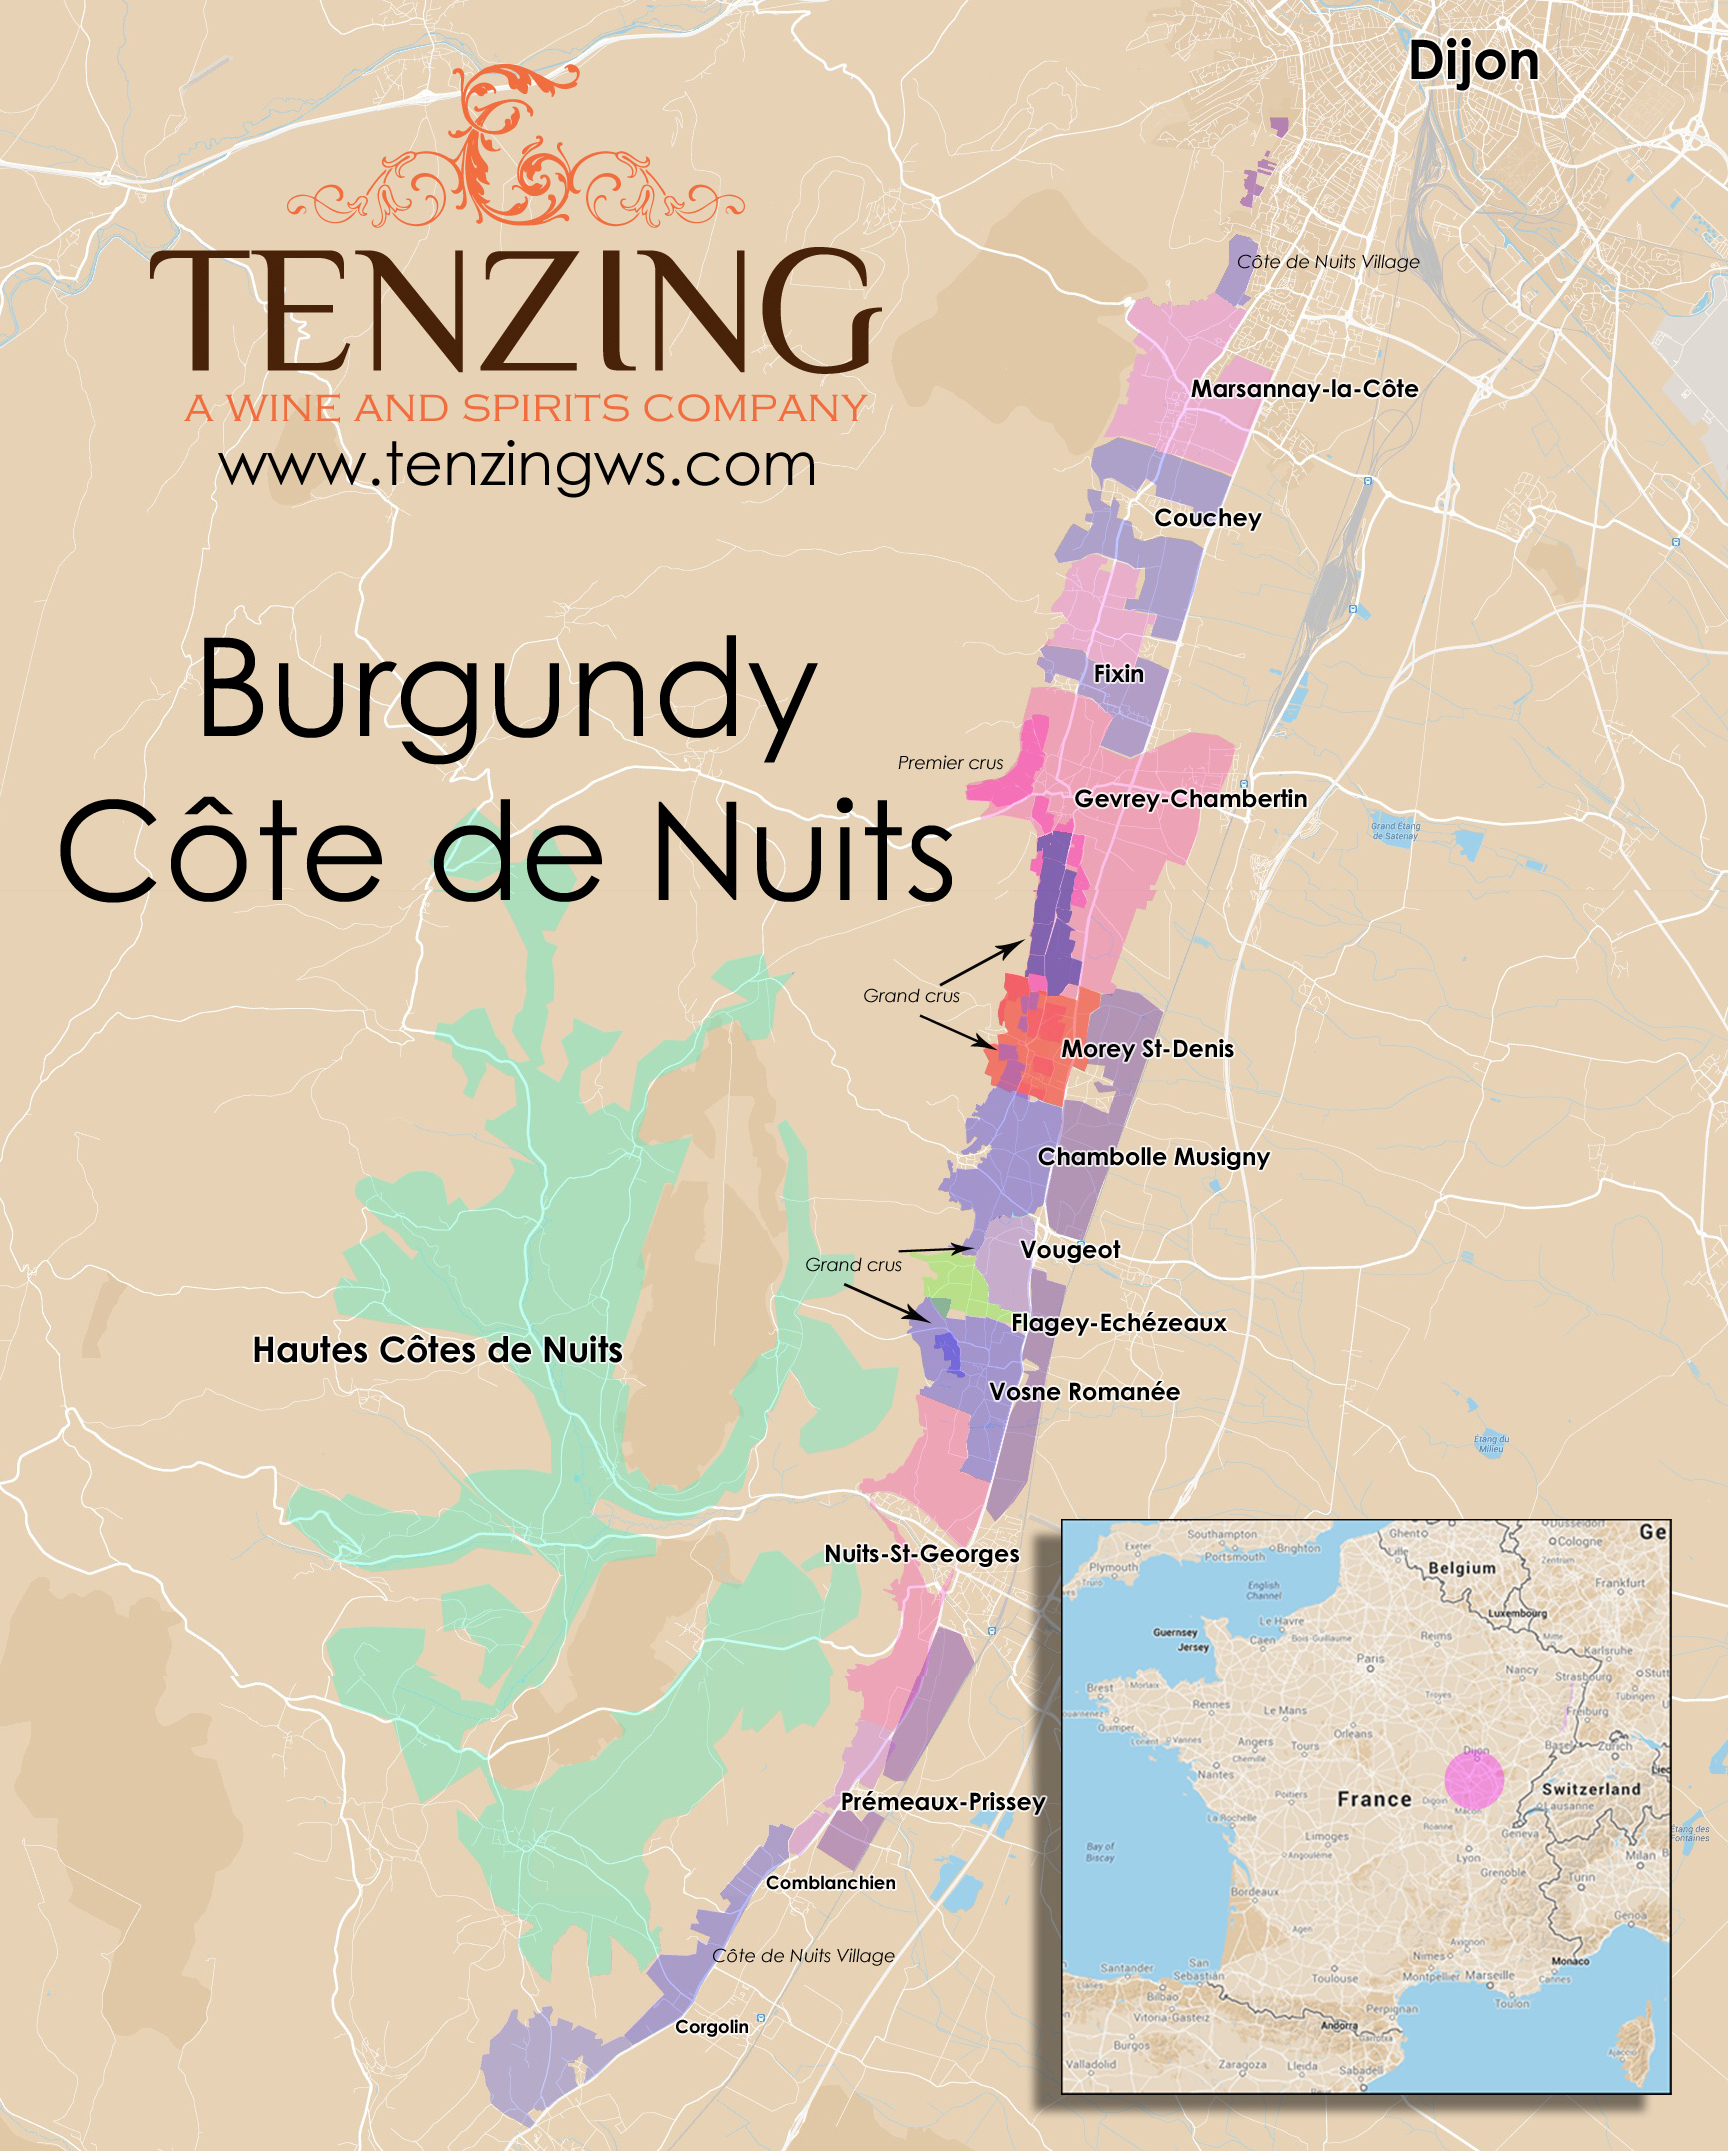 Burgundy-Cote-de-Nuits-Map.jpg